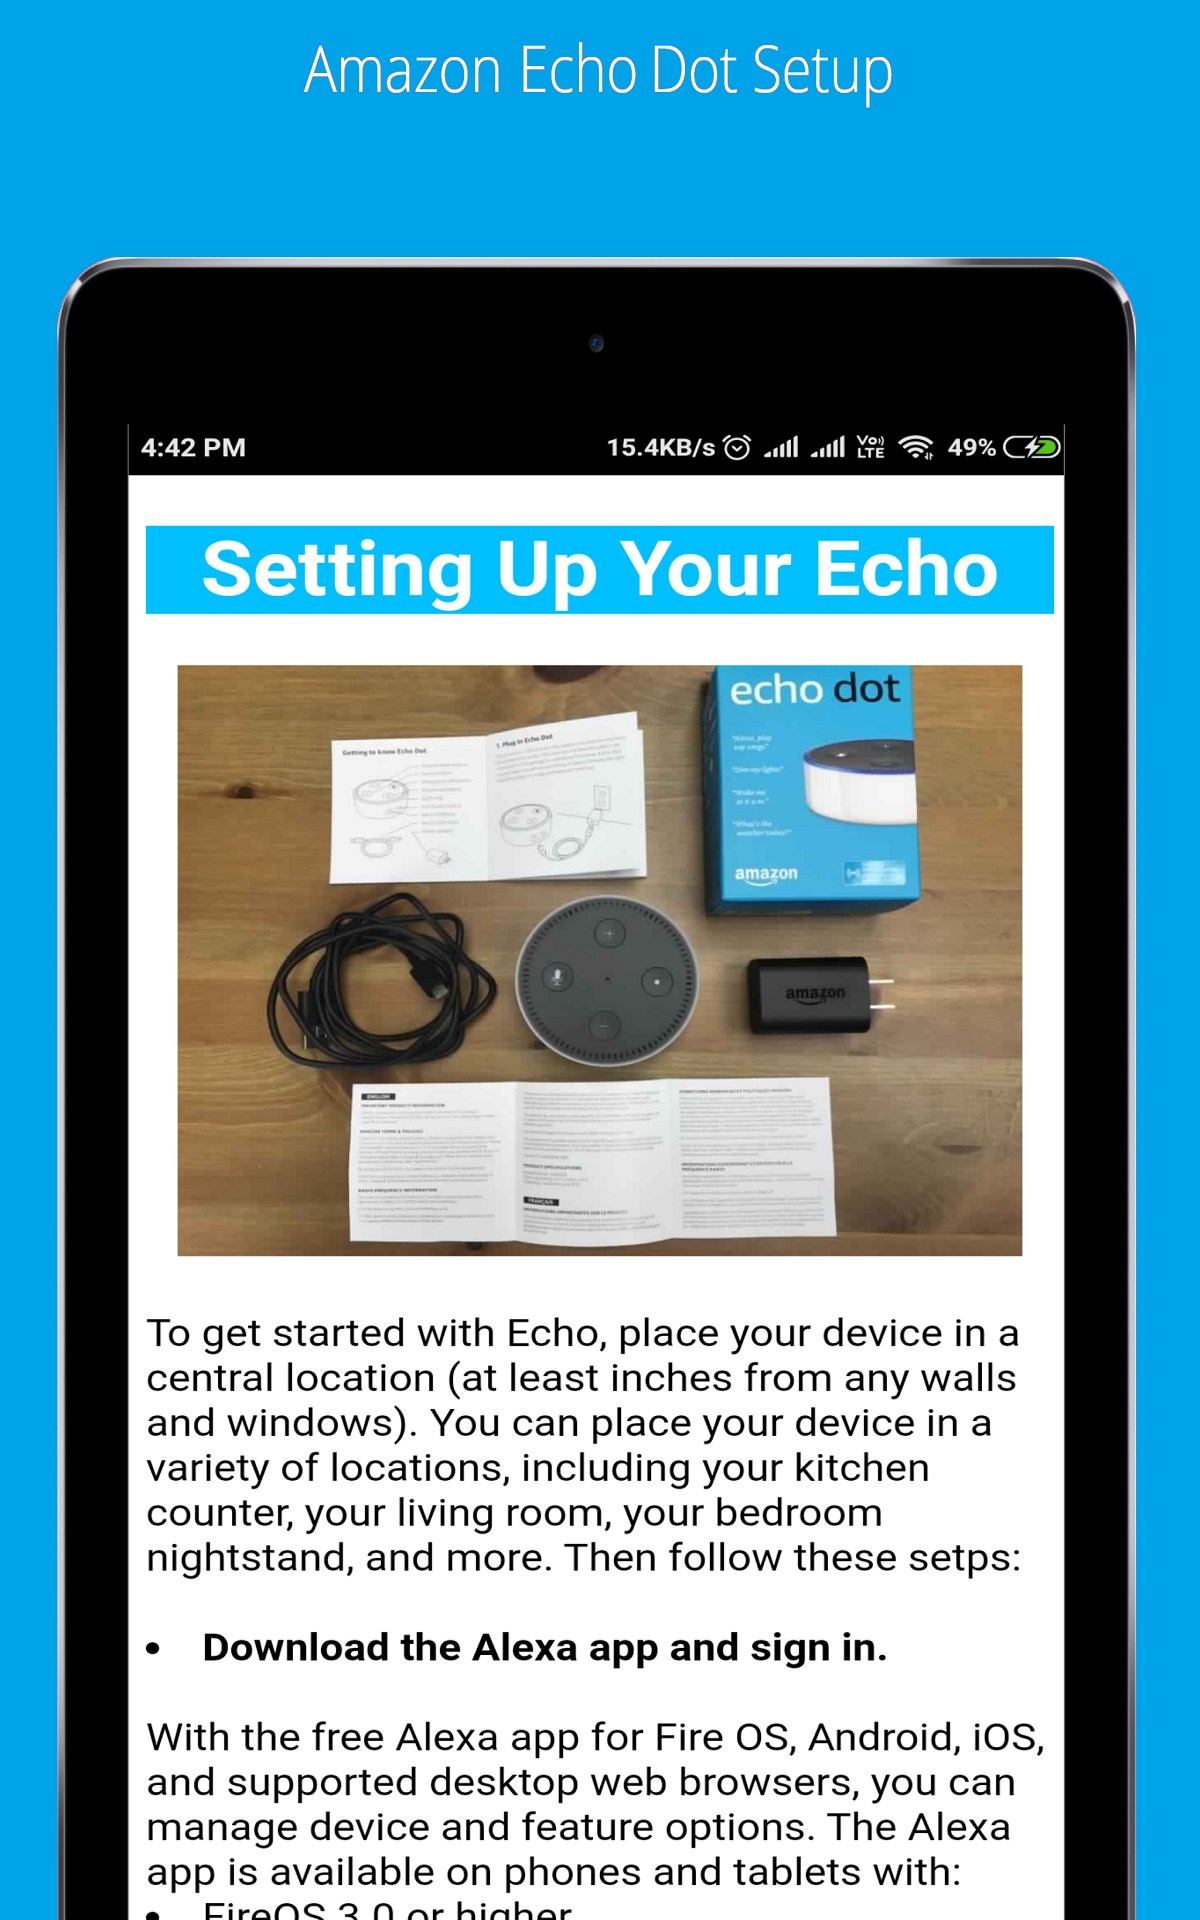 Guide for Amazon Echo dot